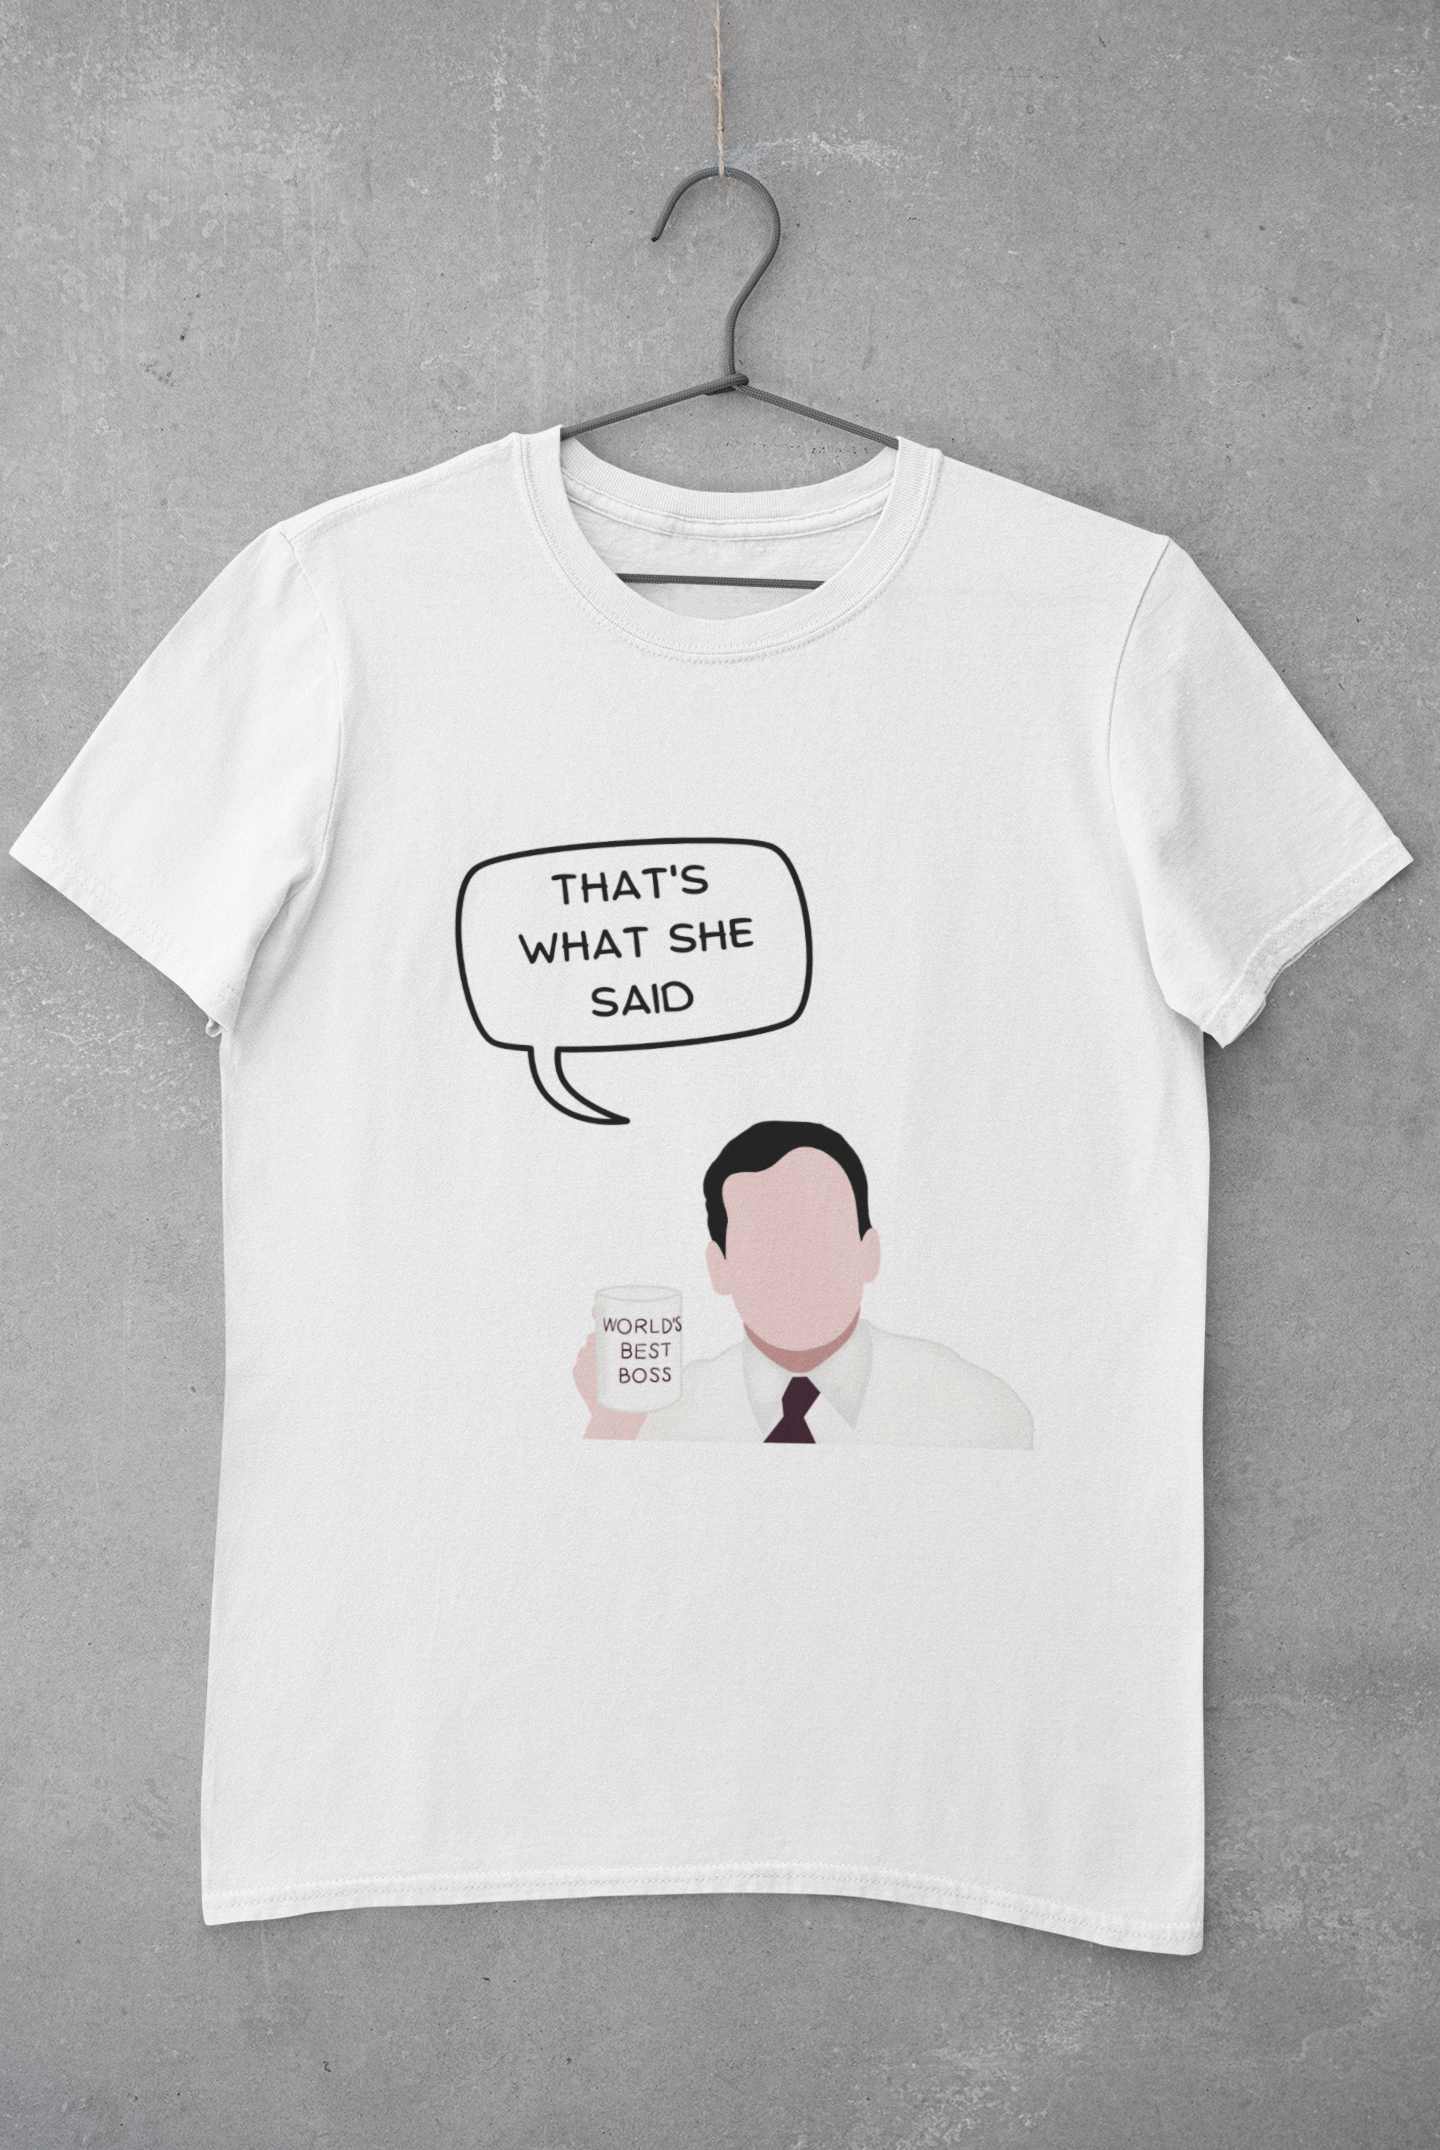 The Office White T-shirt - Michael Scott - That's what she said